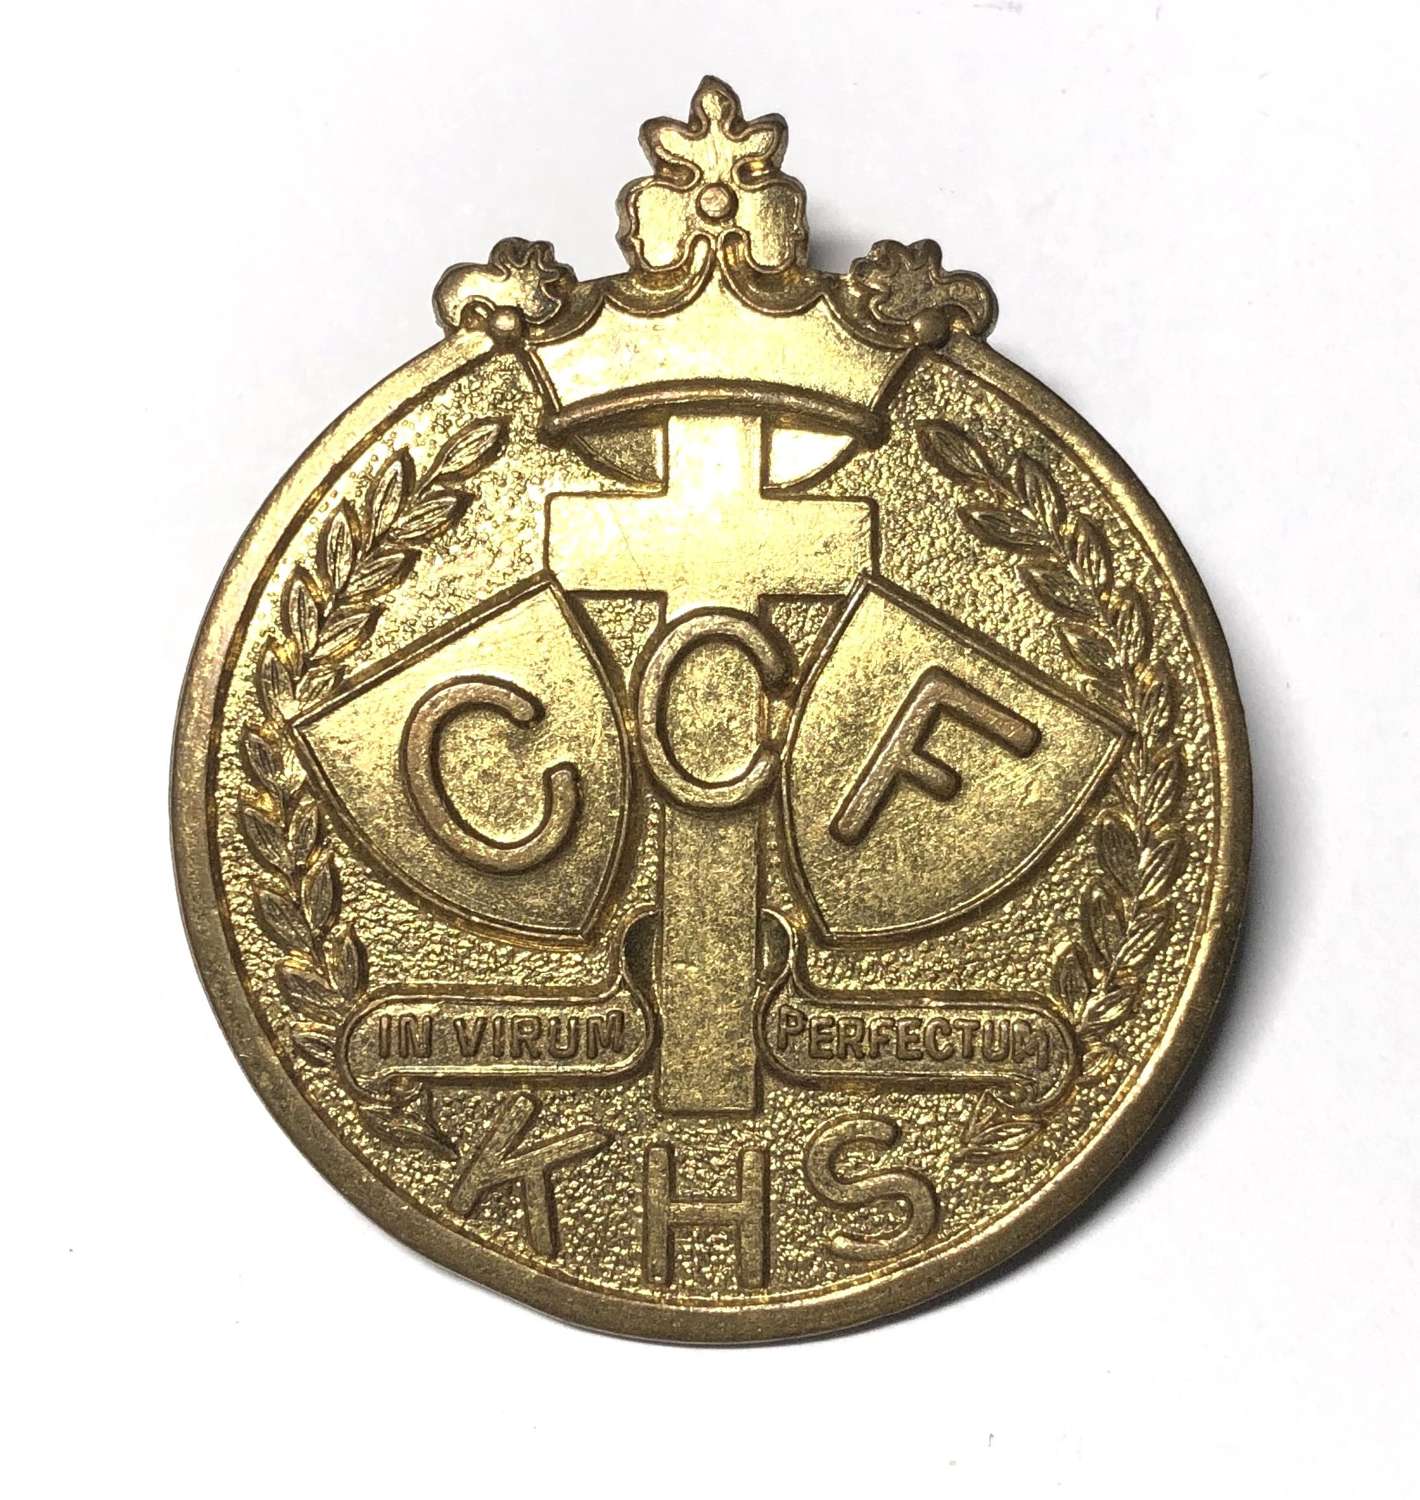 Kingham Hill School CCF Oxfordshire cap badge